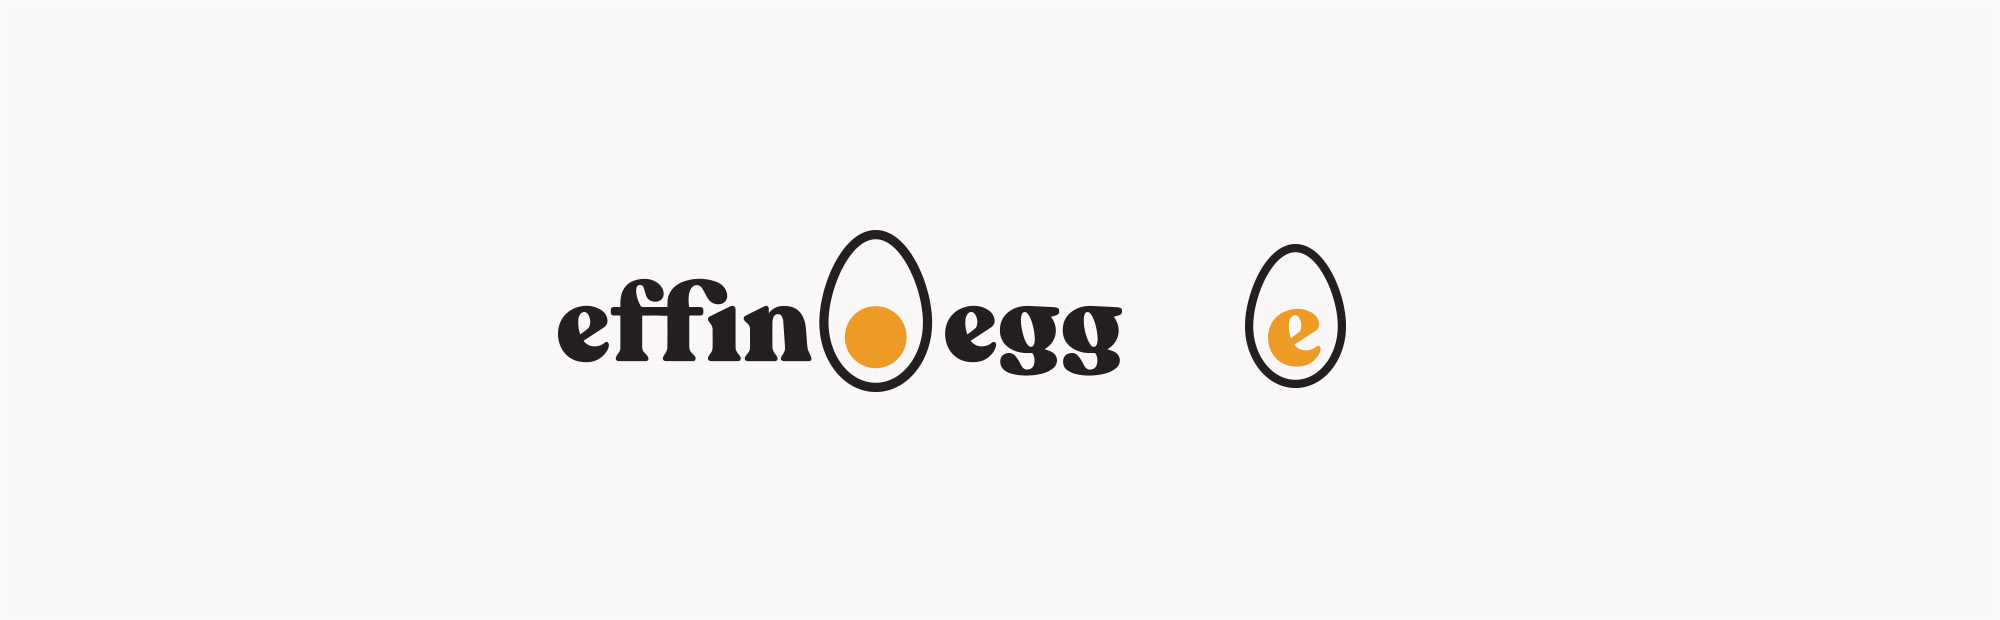 effin-egg-logo-section